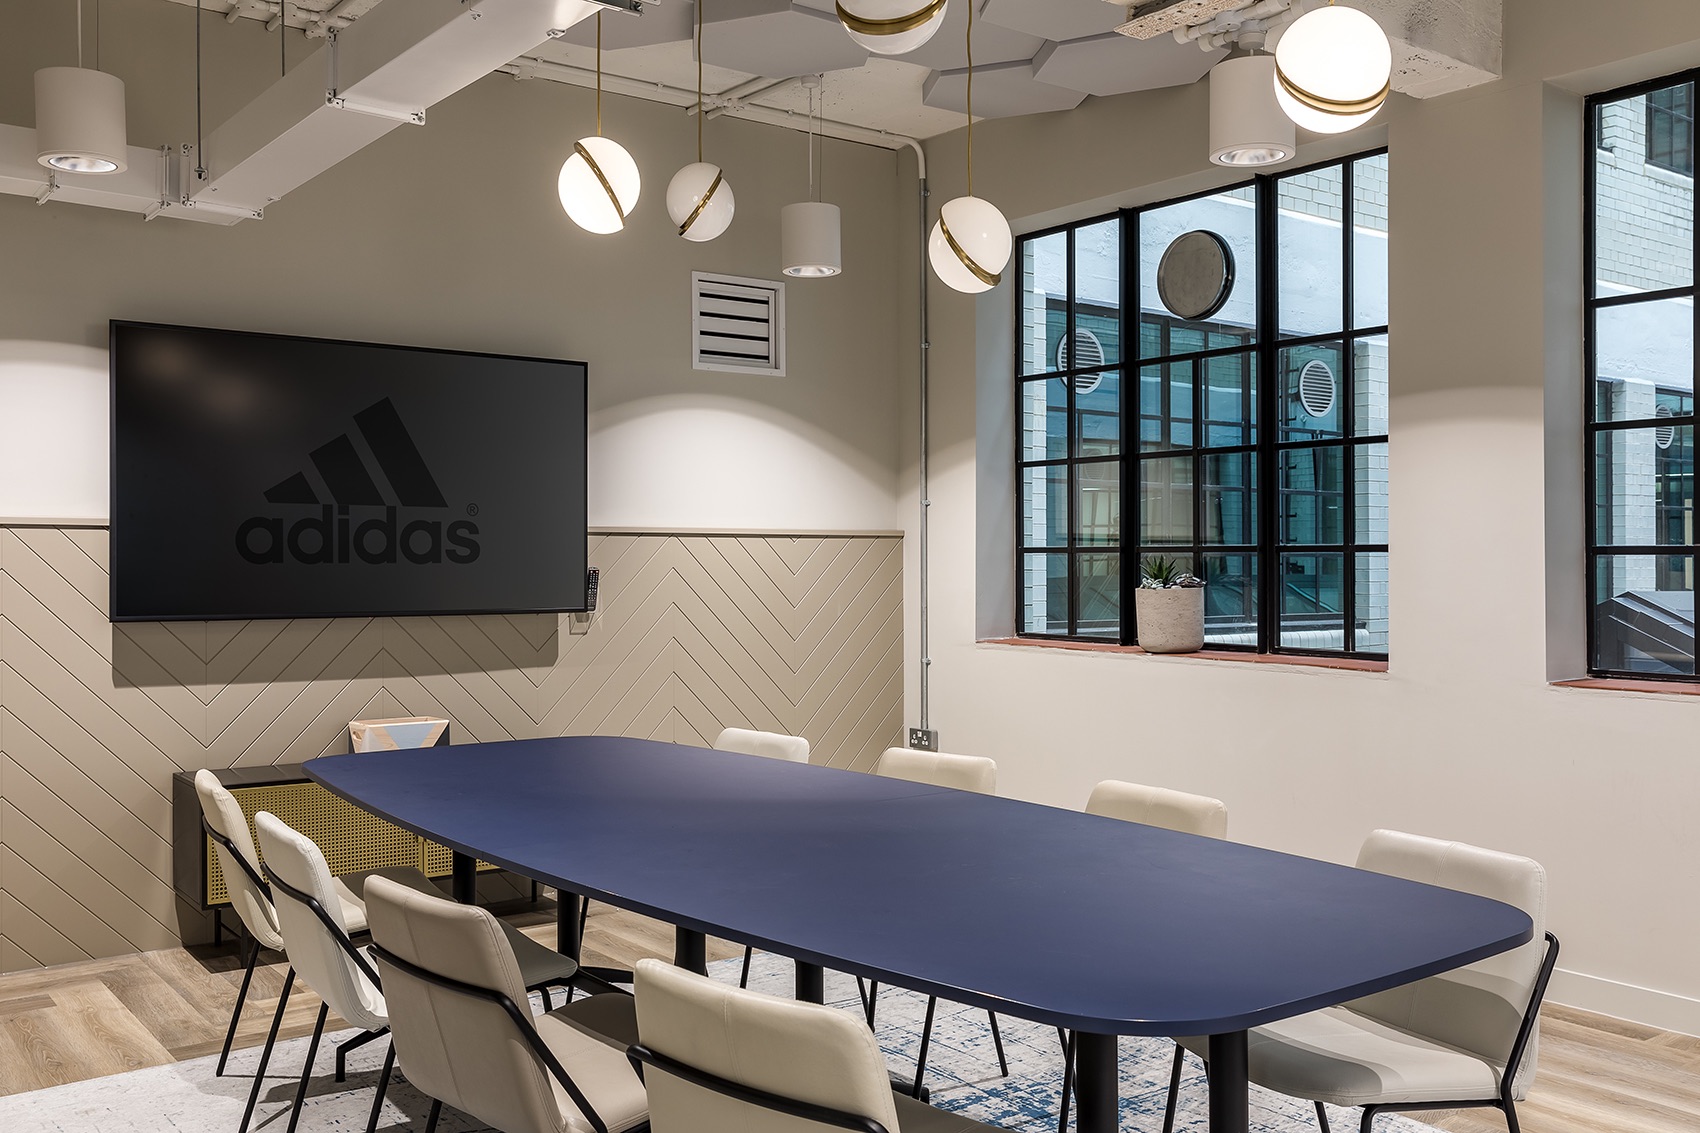 A Look Inside Adidas' Office -